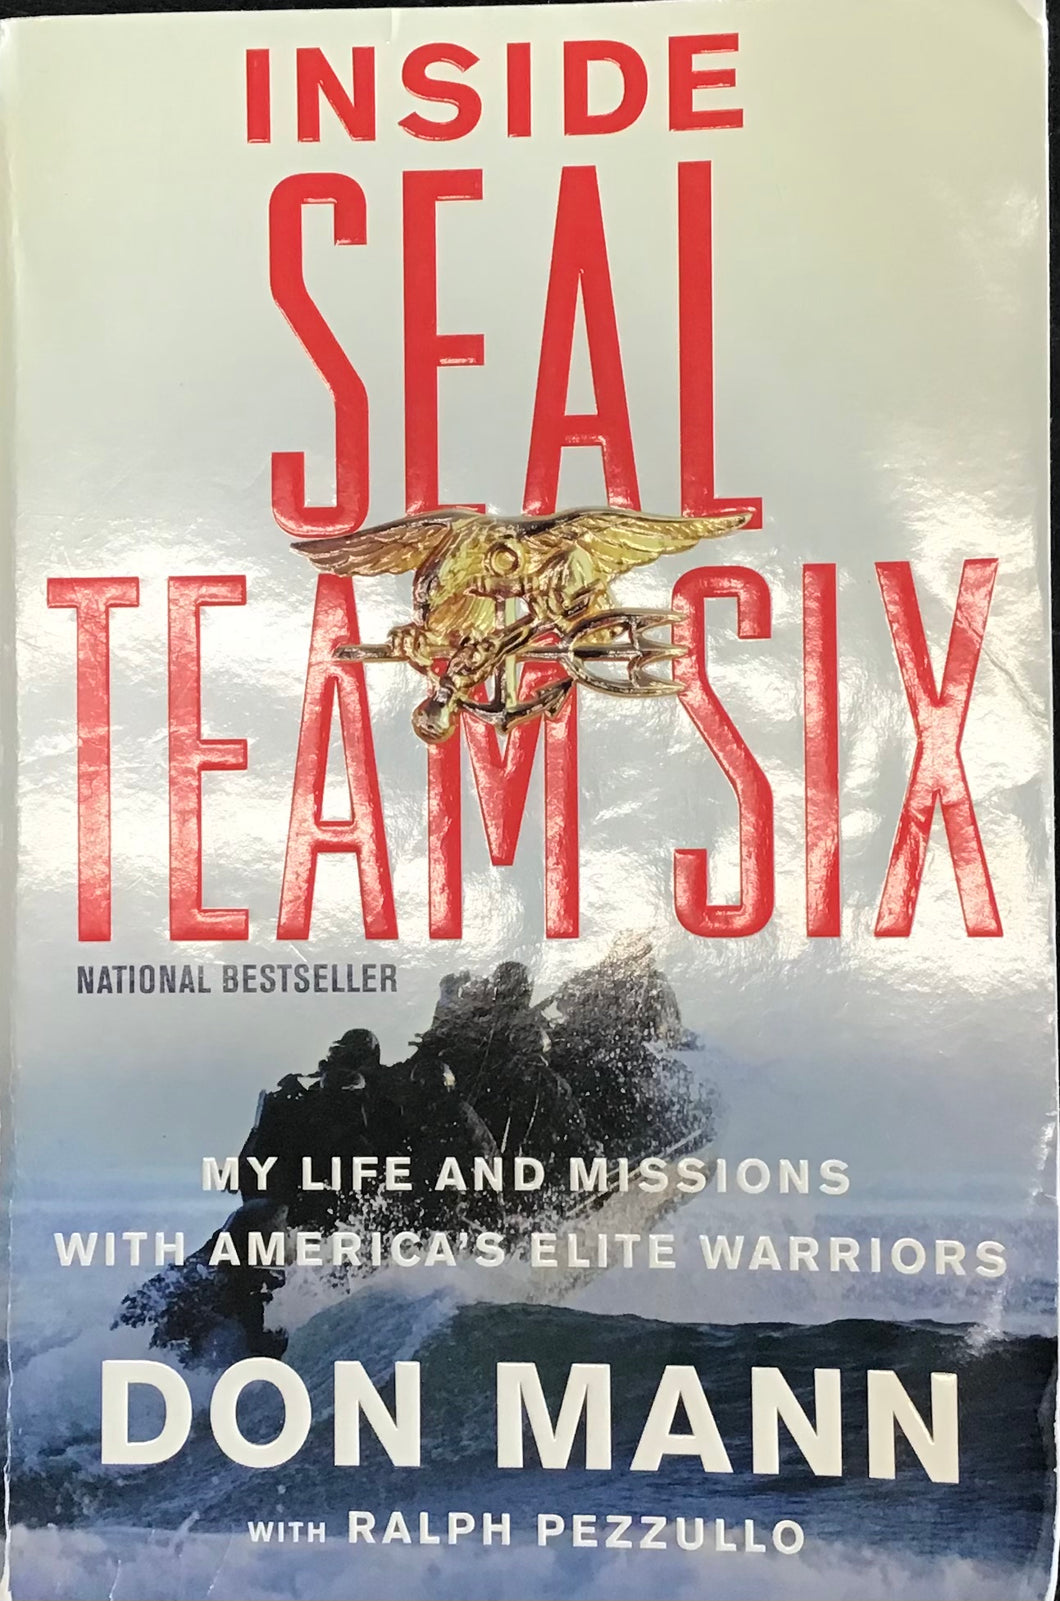 Inside Seal Team six, Don Mann